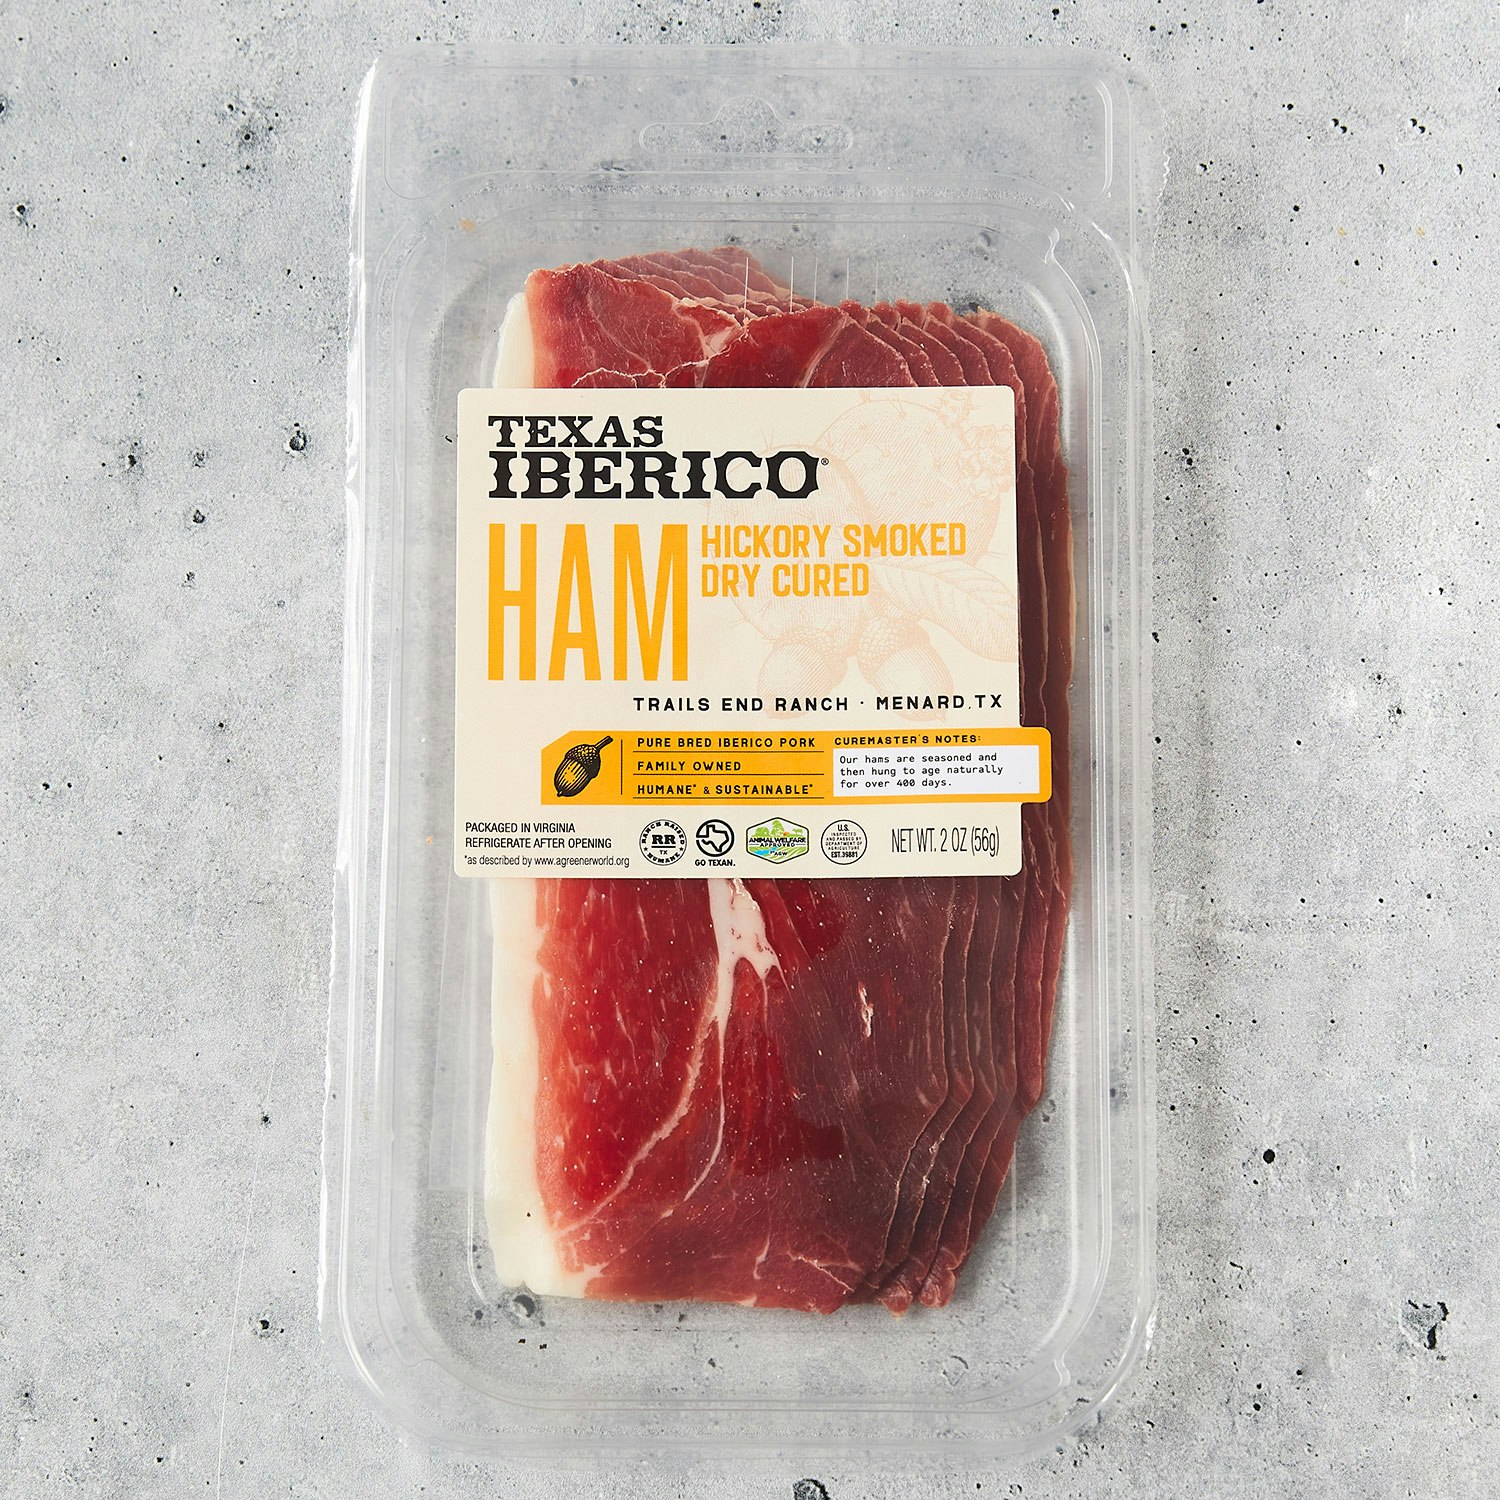 Texas Iberico Sliced Dry Cured Hickory Smoked Ham meats